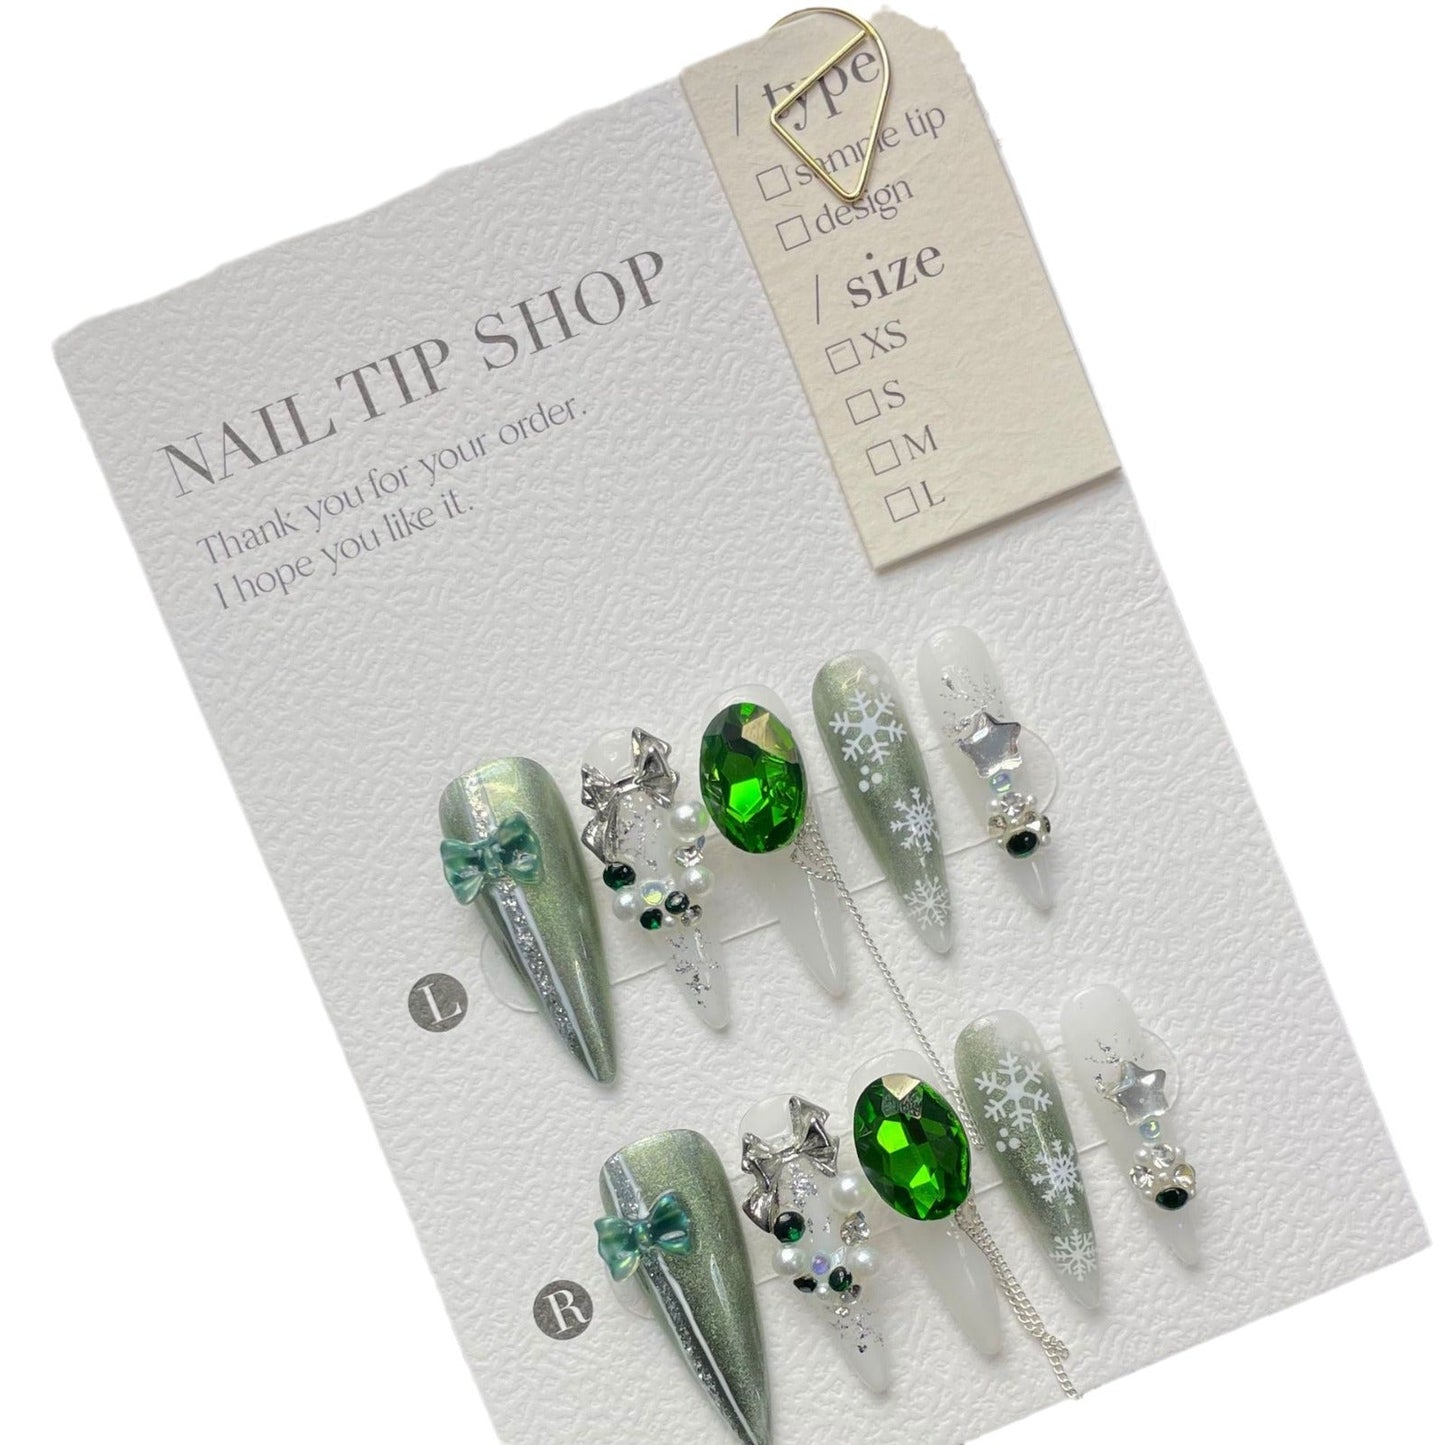 1286 Winter snowflakes style press on nails 100% handmade false nails green white